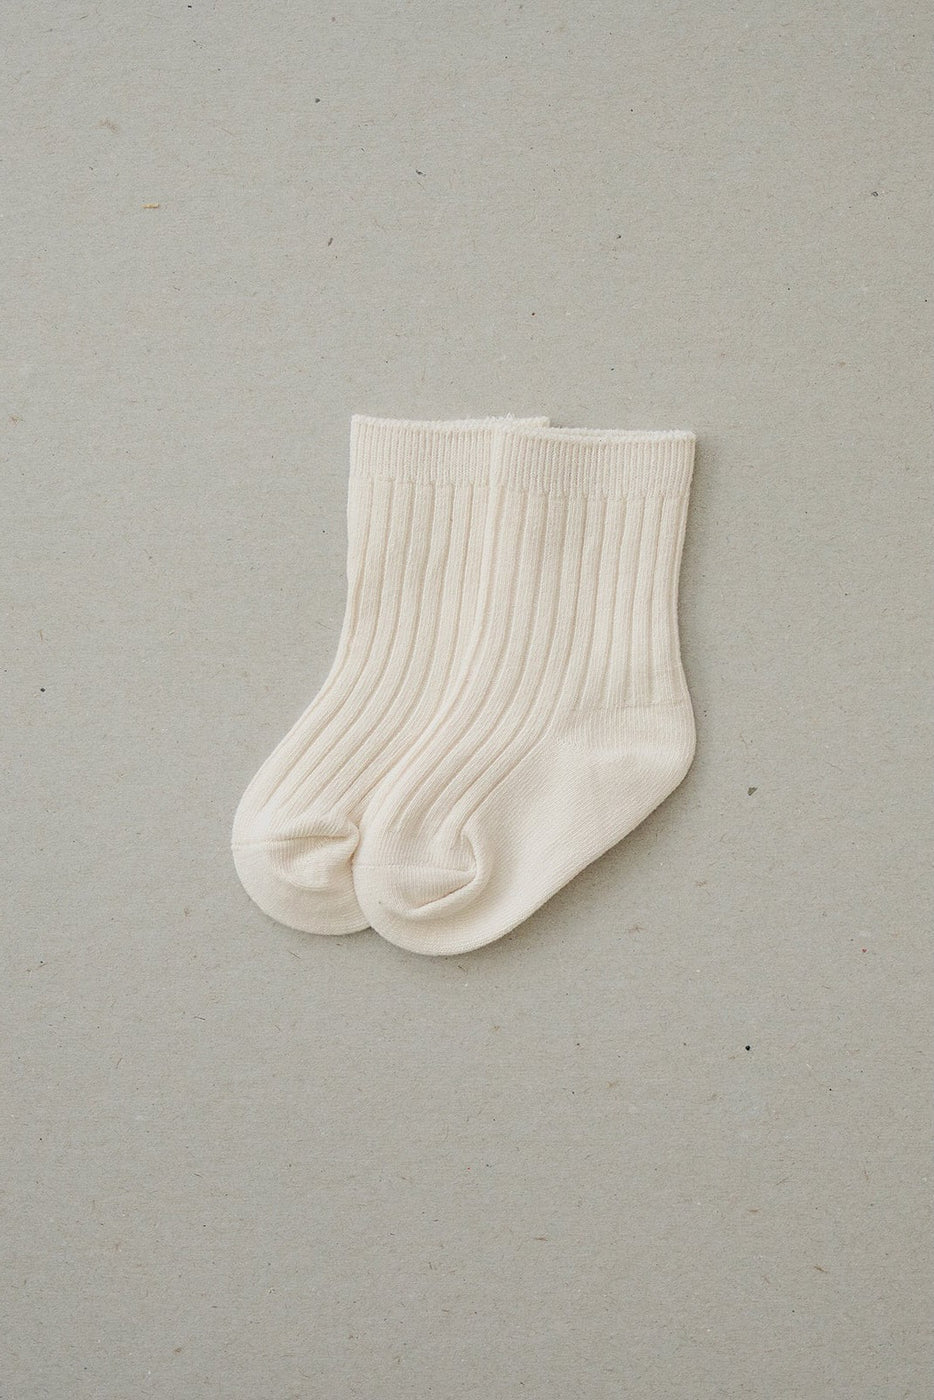 a pair of white socks